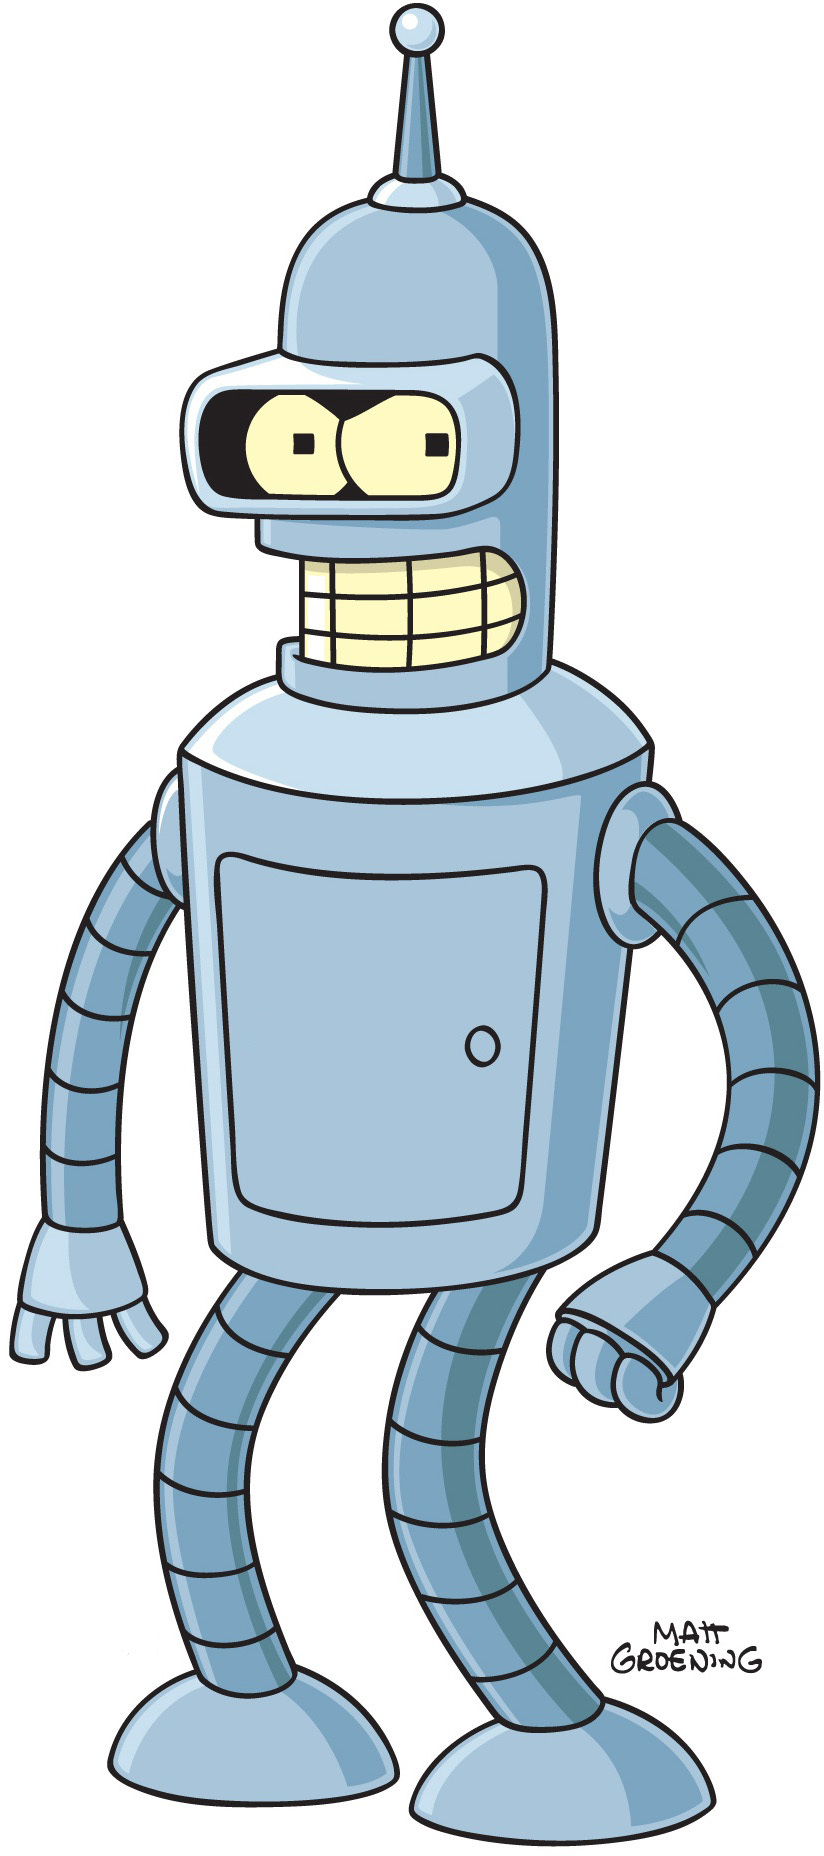 Bender (Futurama), con tres dedos en cada mano